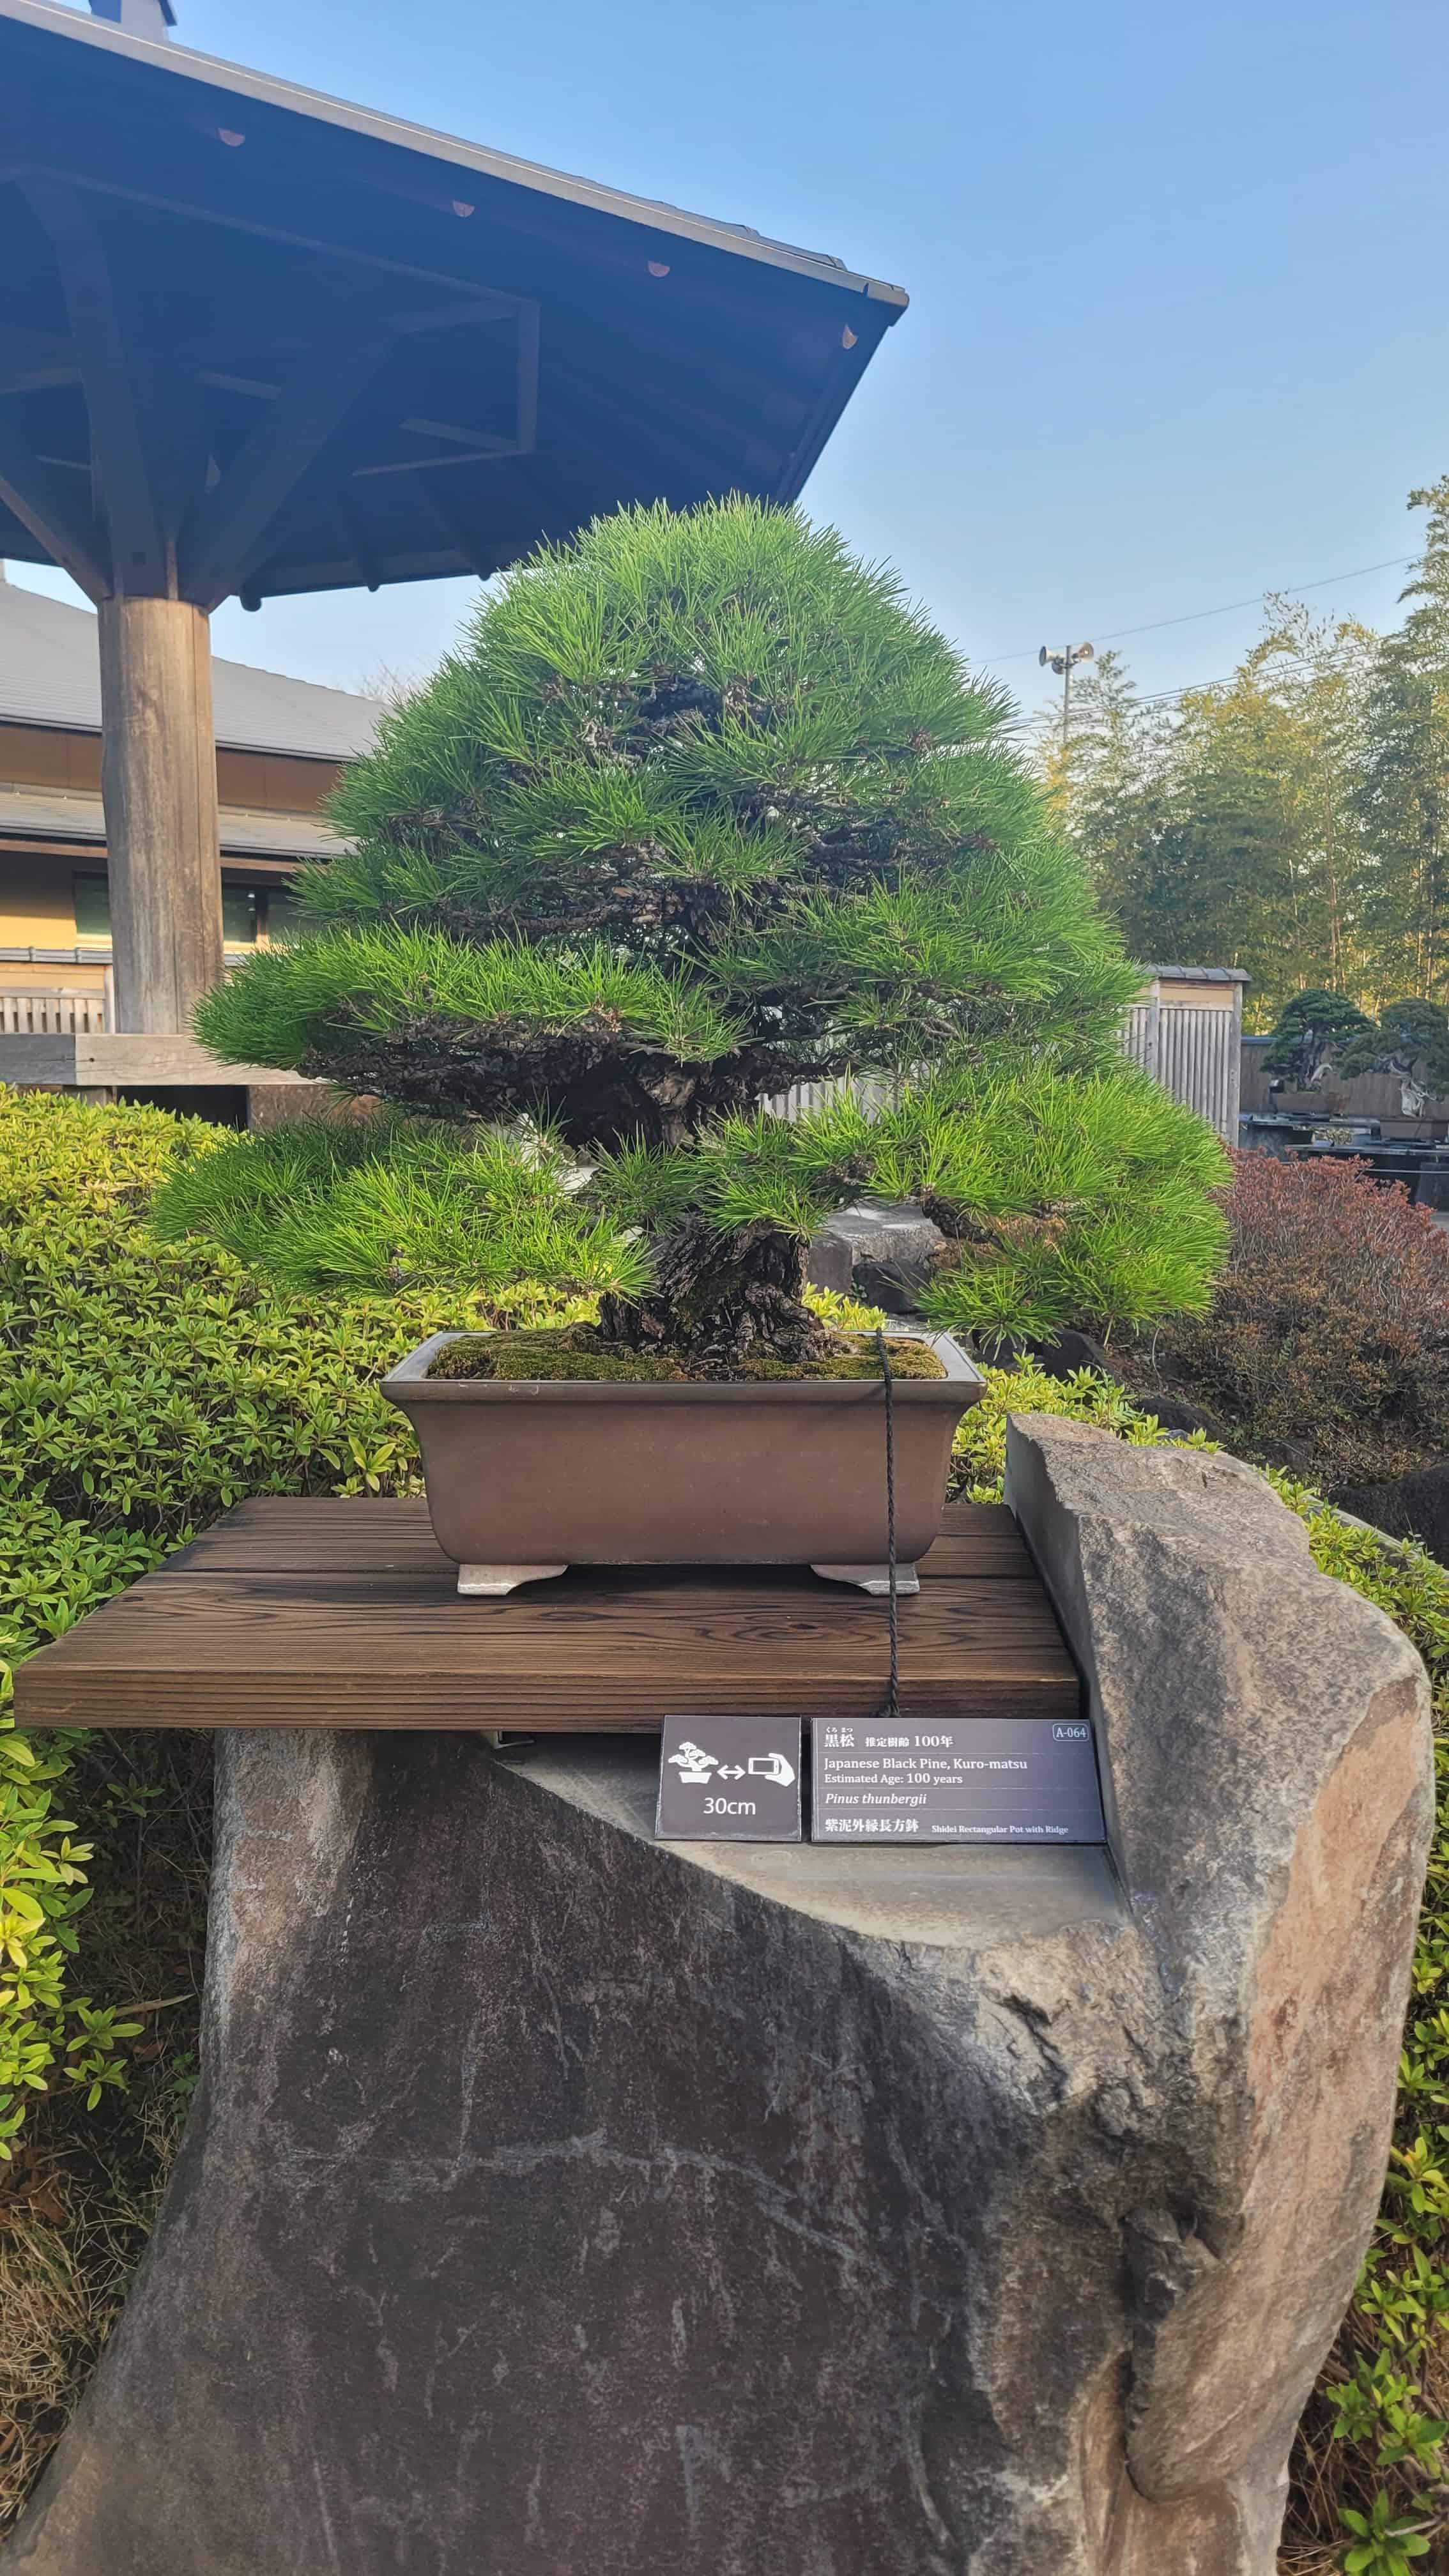 A pine bonsai tree from omiya museum in Japan